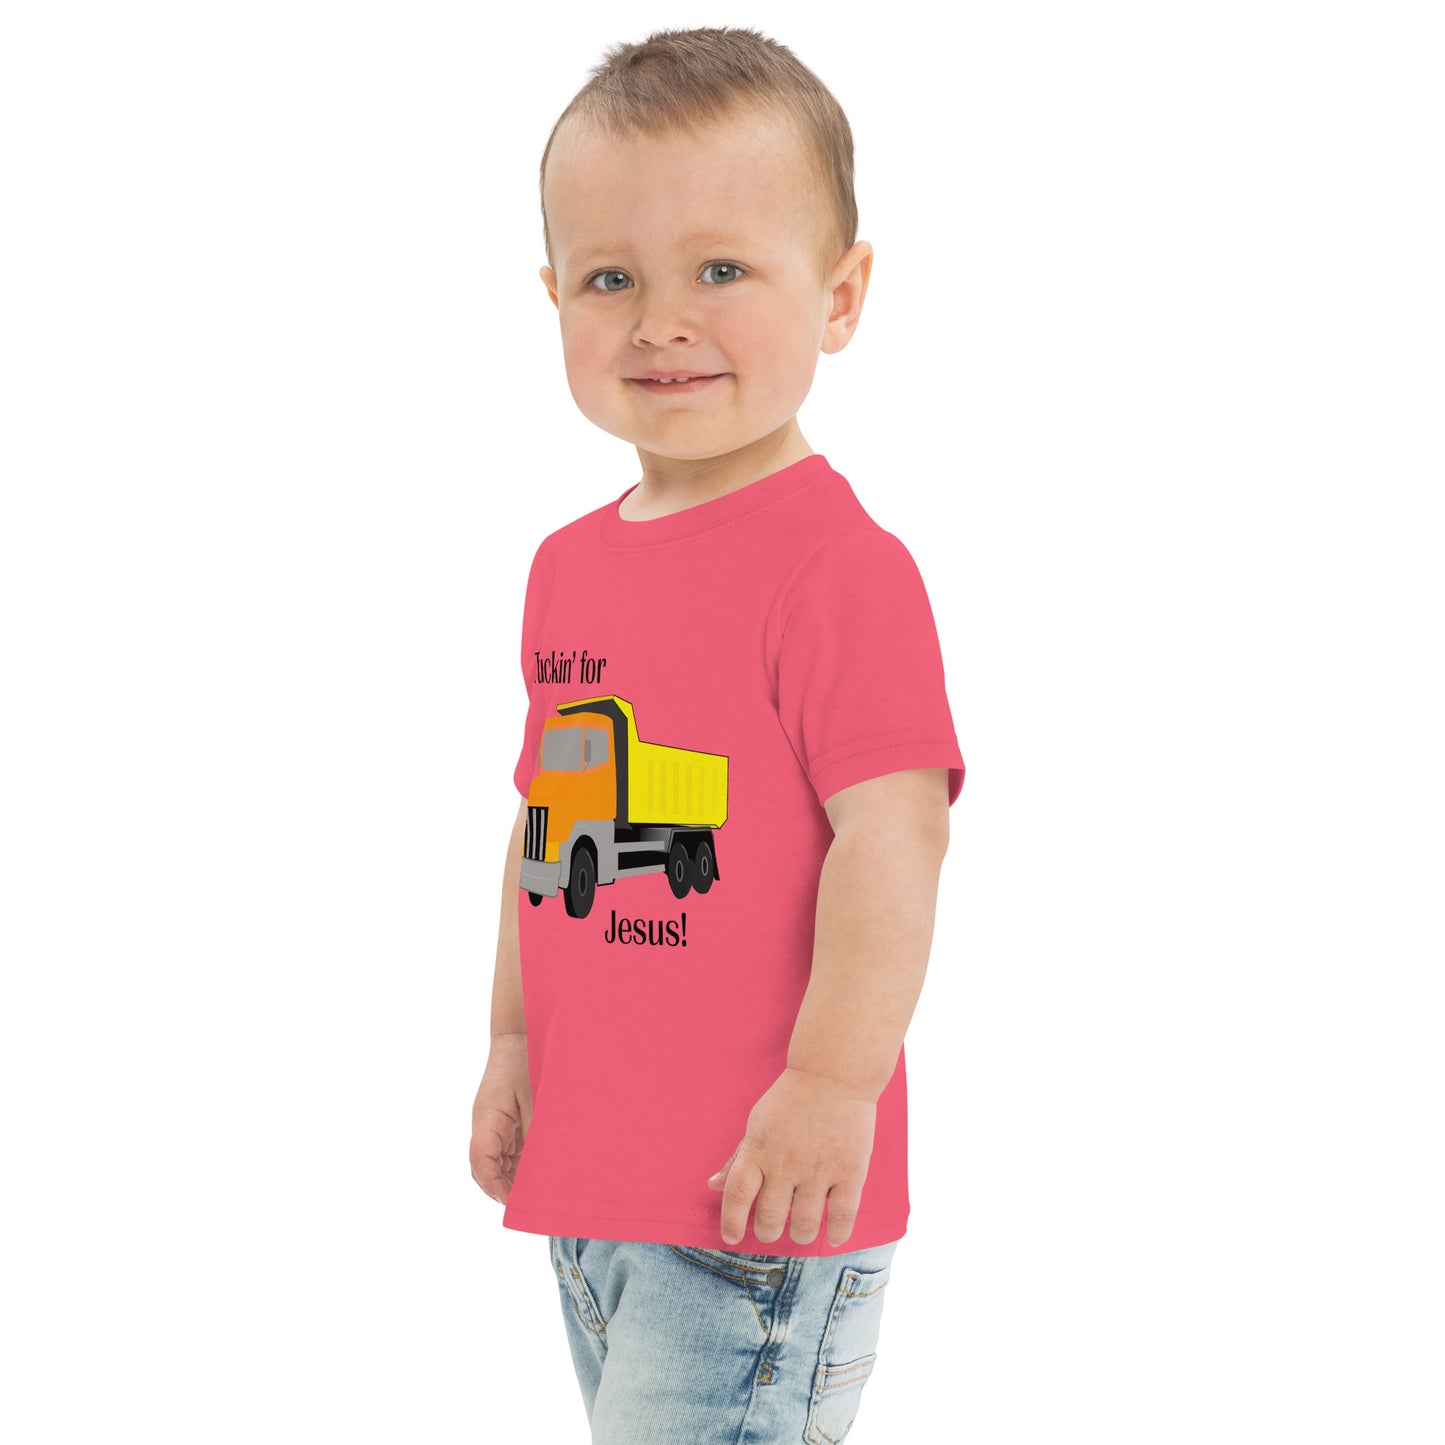 Truckin' for Jesus Toddler T-Shirt